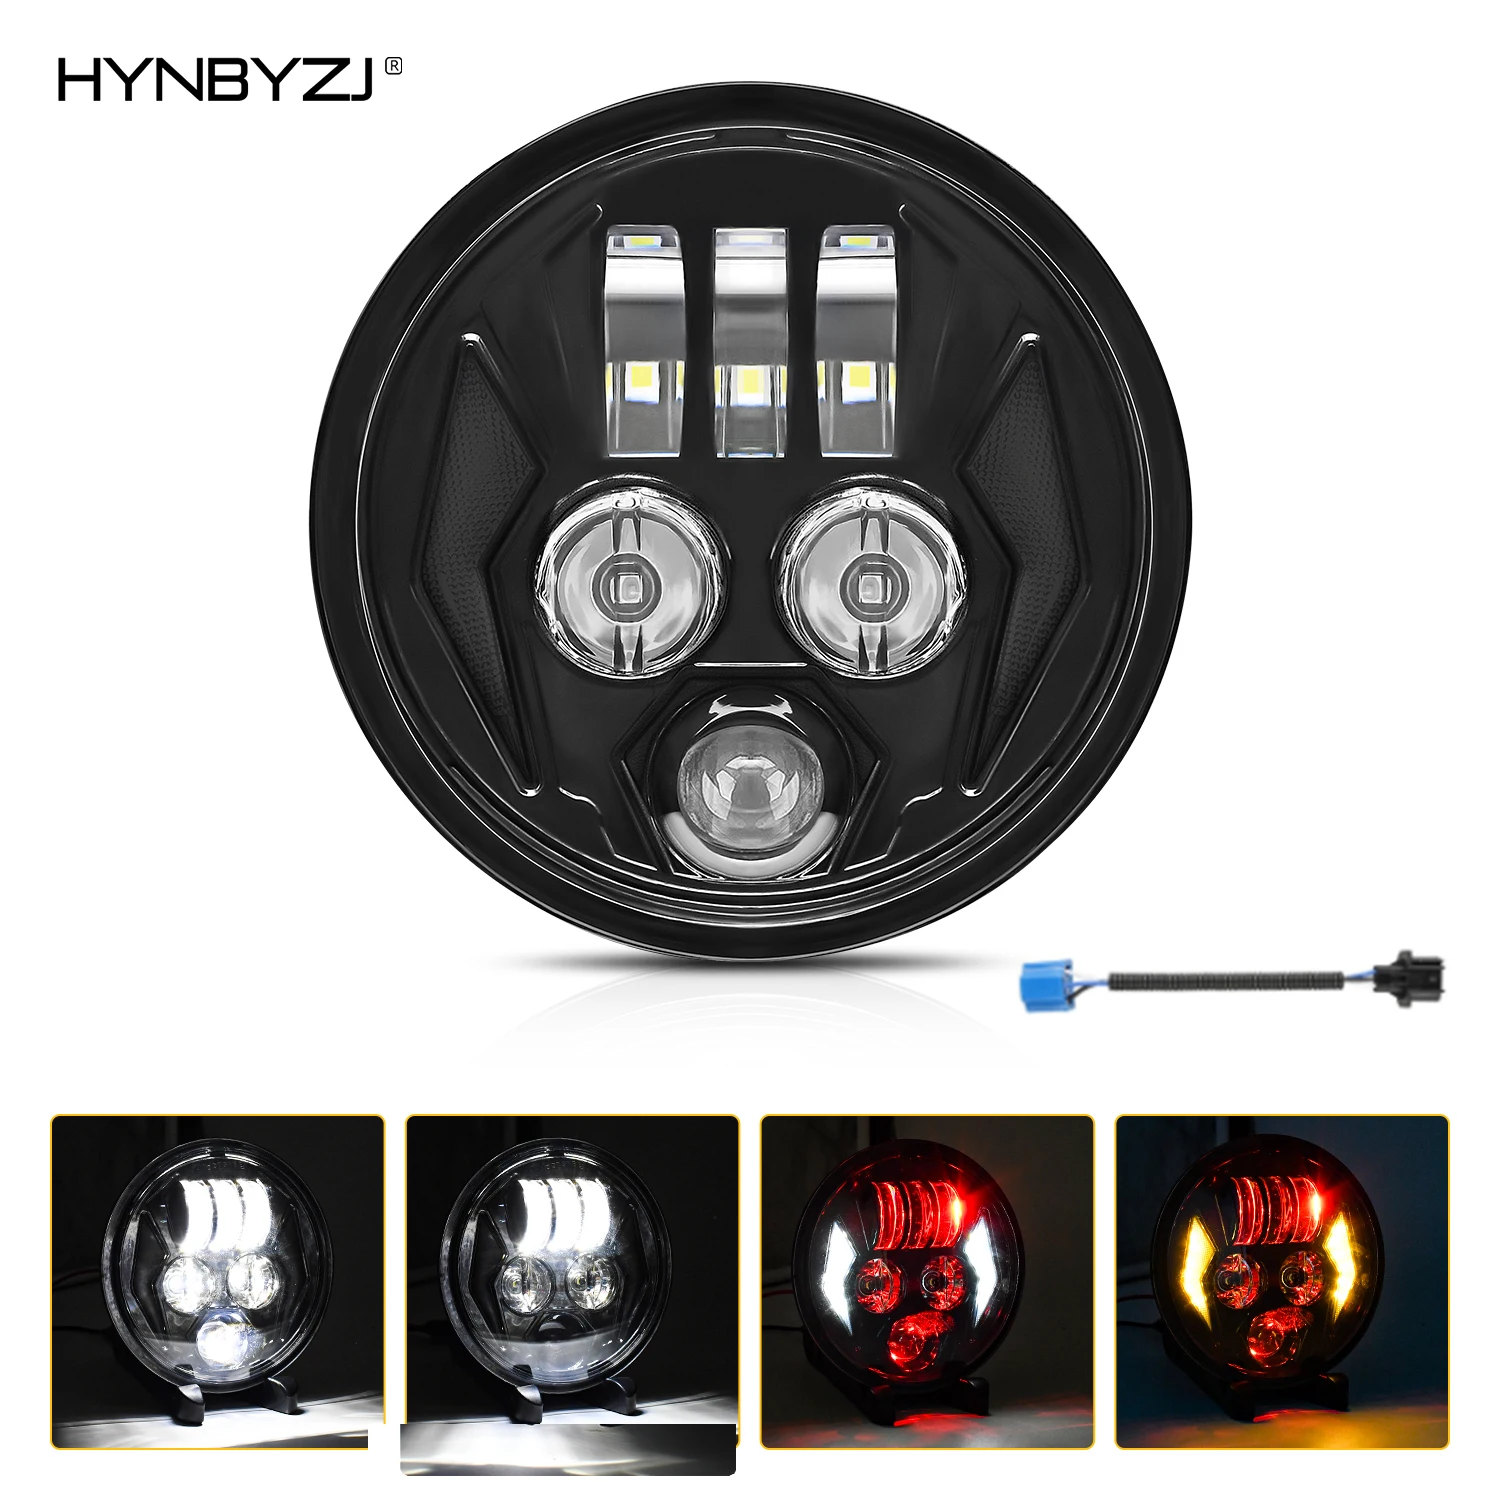 

HYNBYZJ 1 шт. 300 Вт мотоциклетная Лампа 6000 дюймов 3000K/K лм Halo/Crystal светодиодный без мерцания IP67 водонепроницаемая DRL